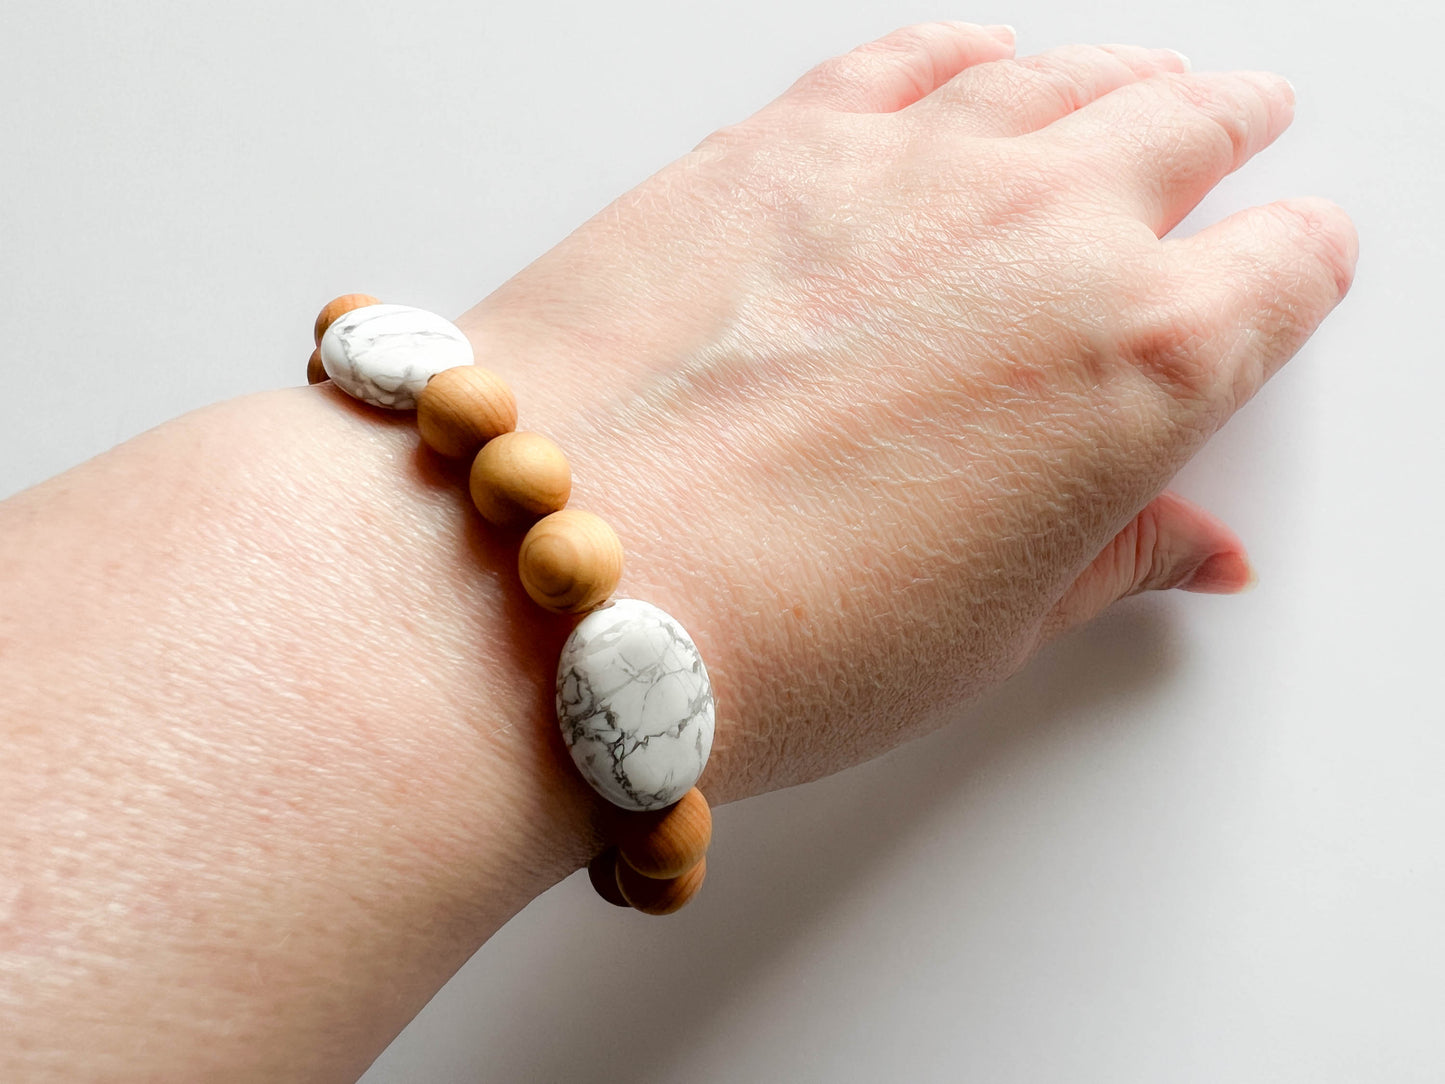 Cedar wood & White Marbled stone bead stretch bracelet